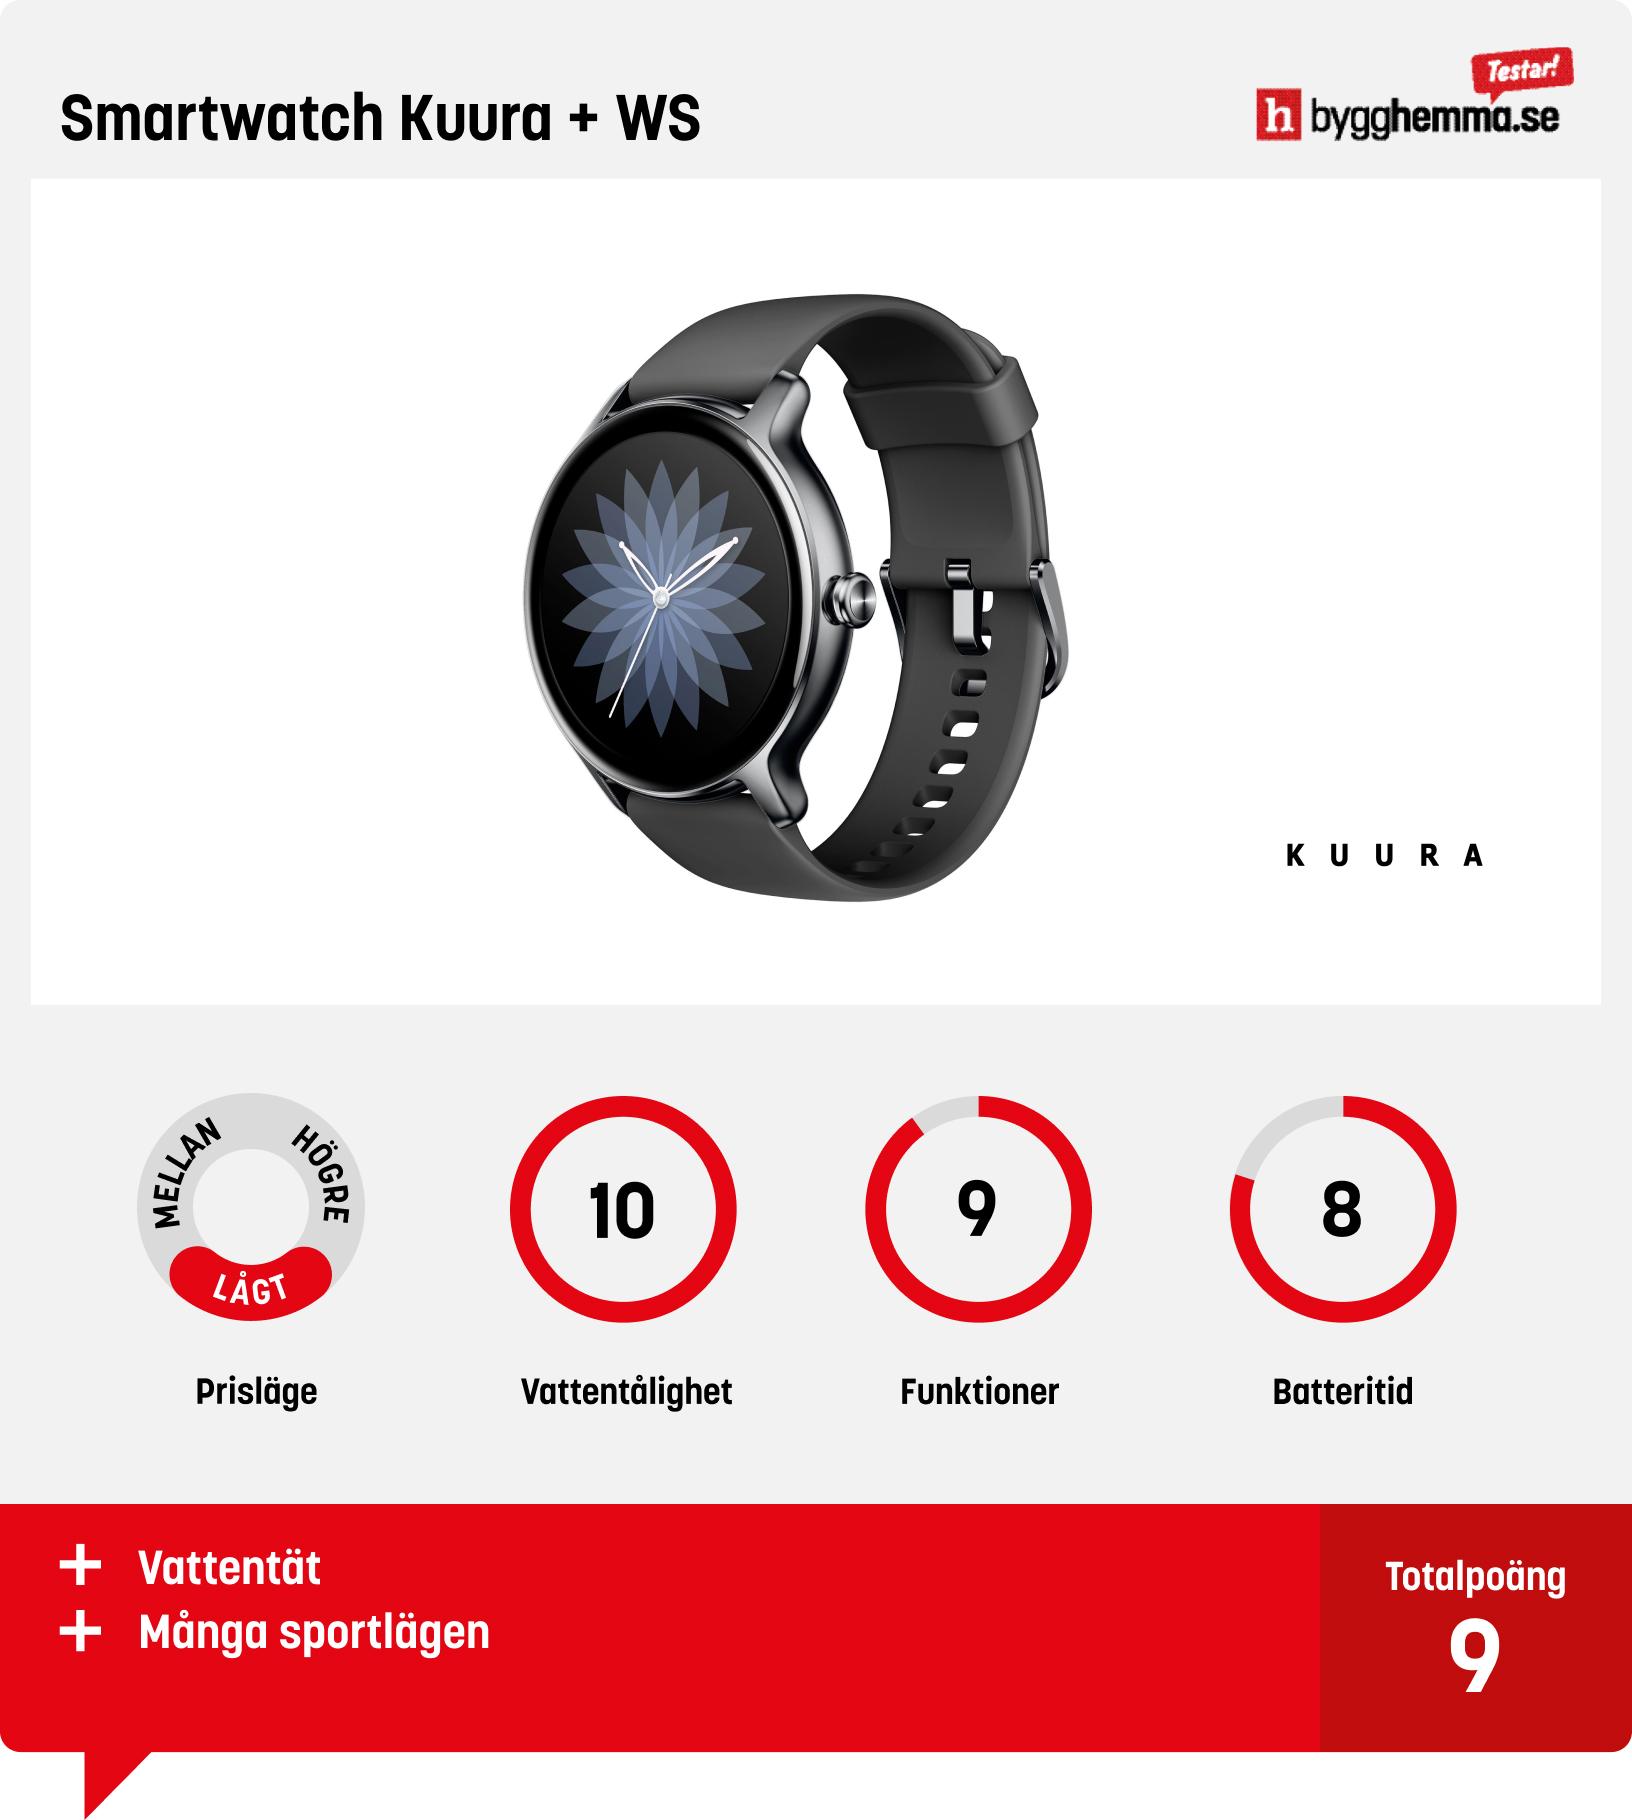 Smartwatch bäst i test - Smartwatch Kuura + WS